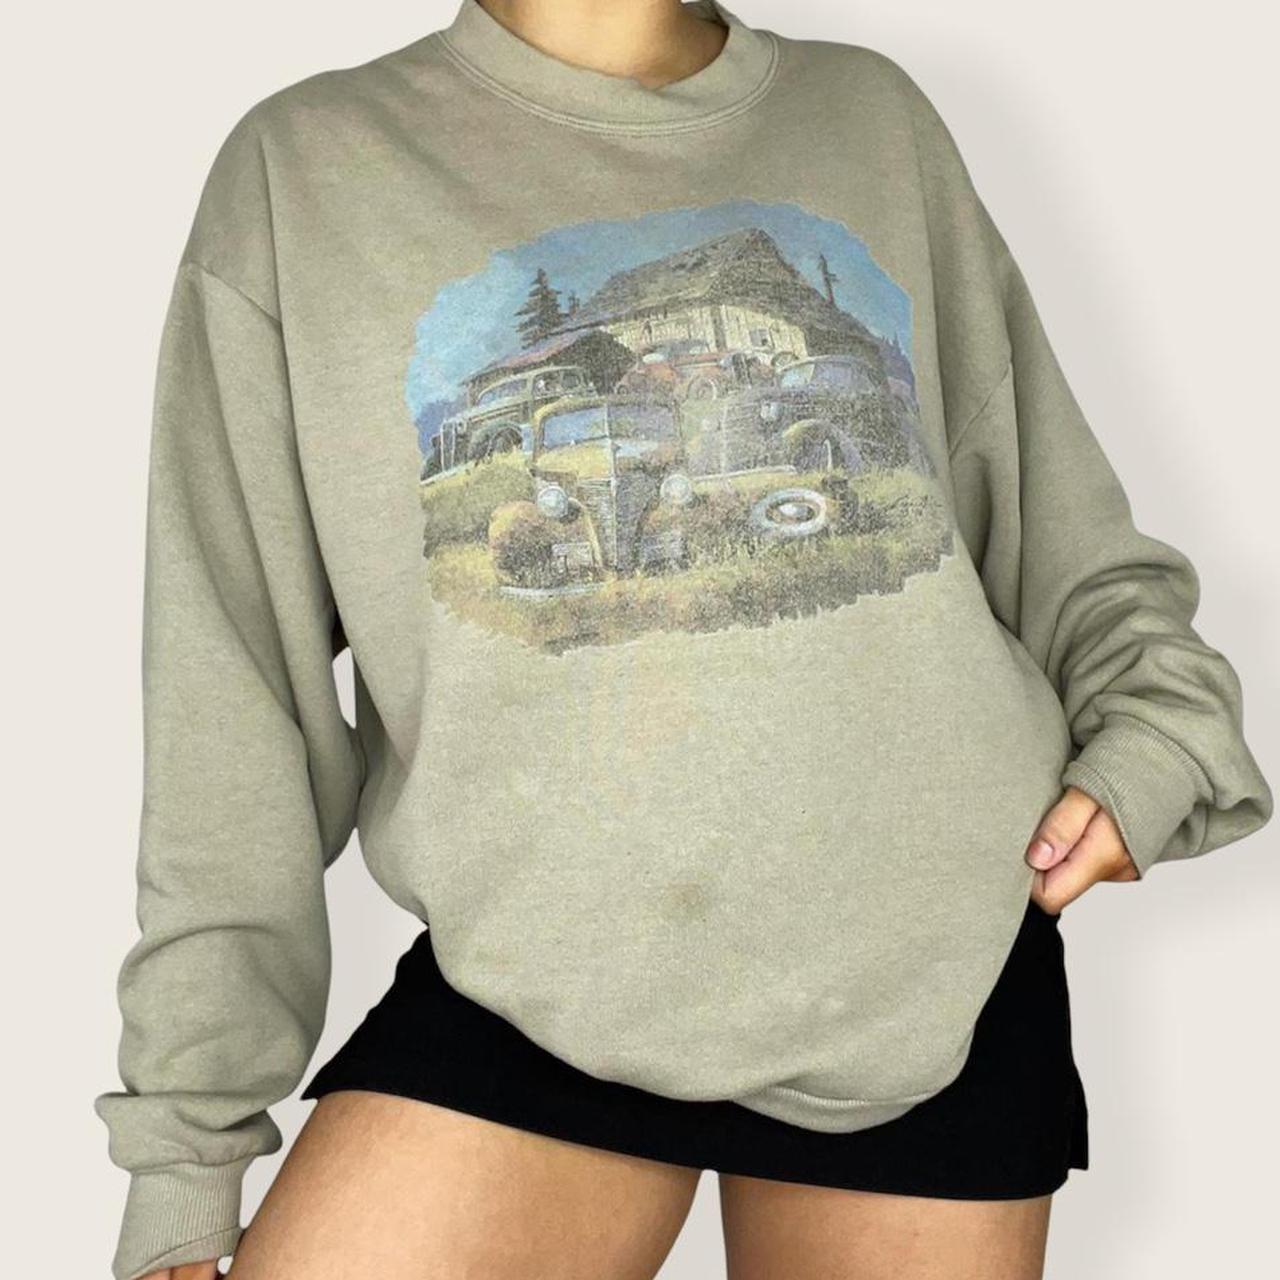 Product Image 1 - Vintage tan crewneck 🧸

Nature sweater